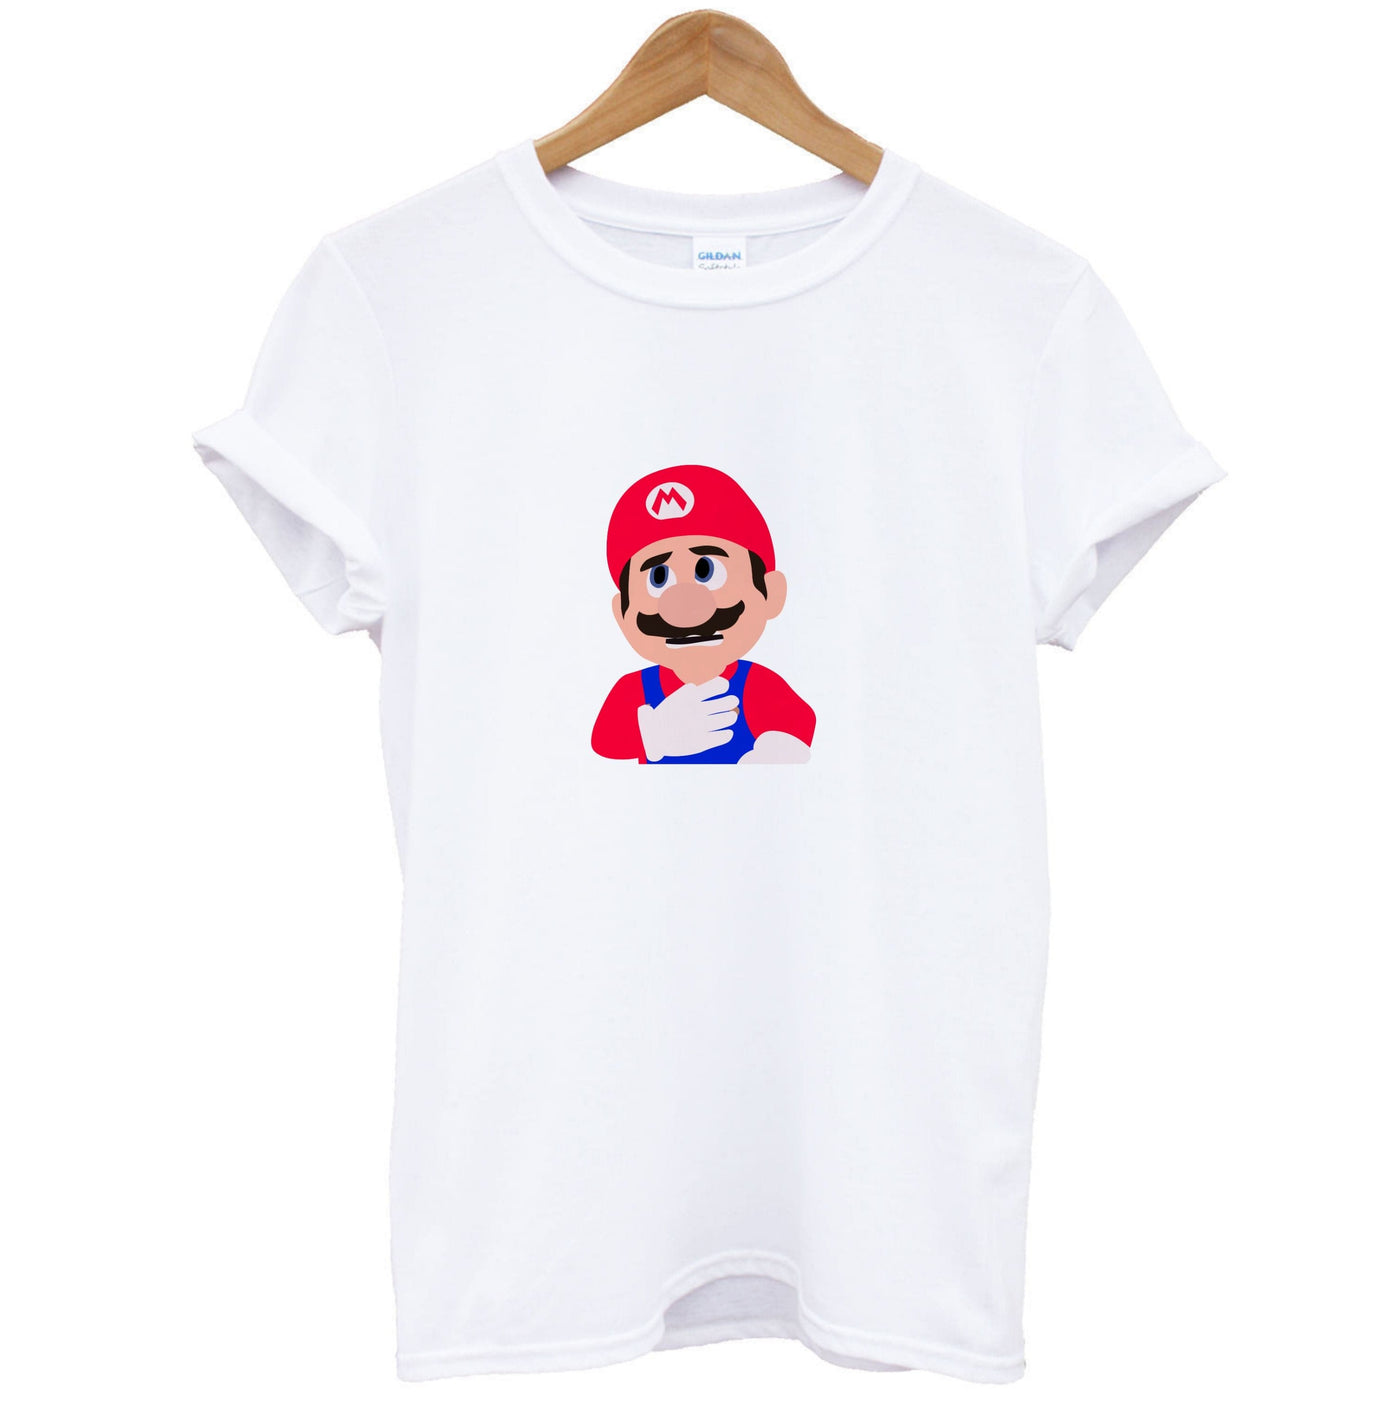 Worried Mario - The Super Mario Bros T-Shirt